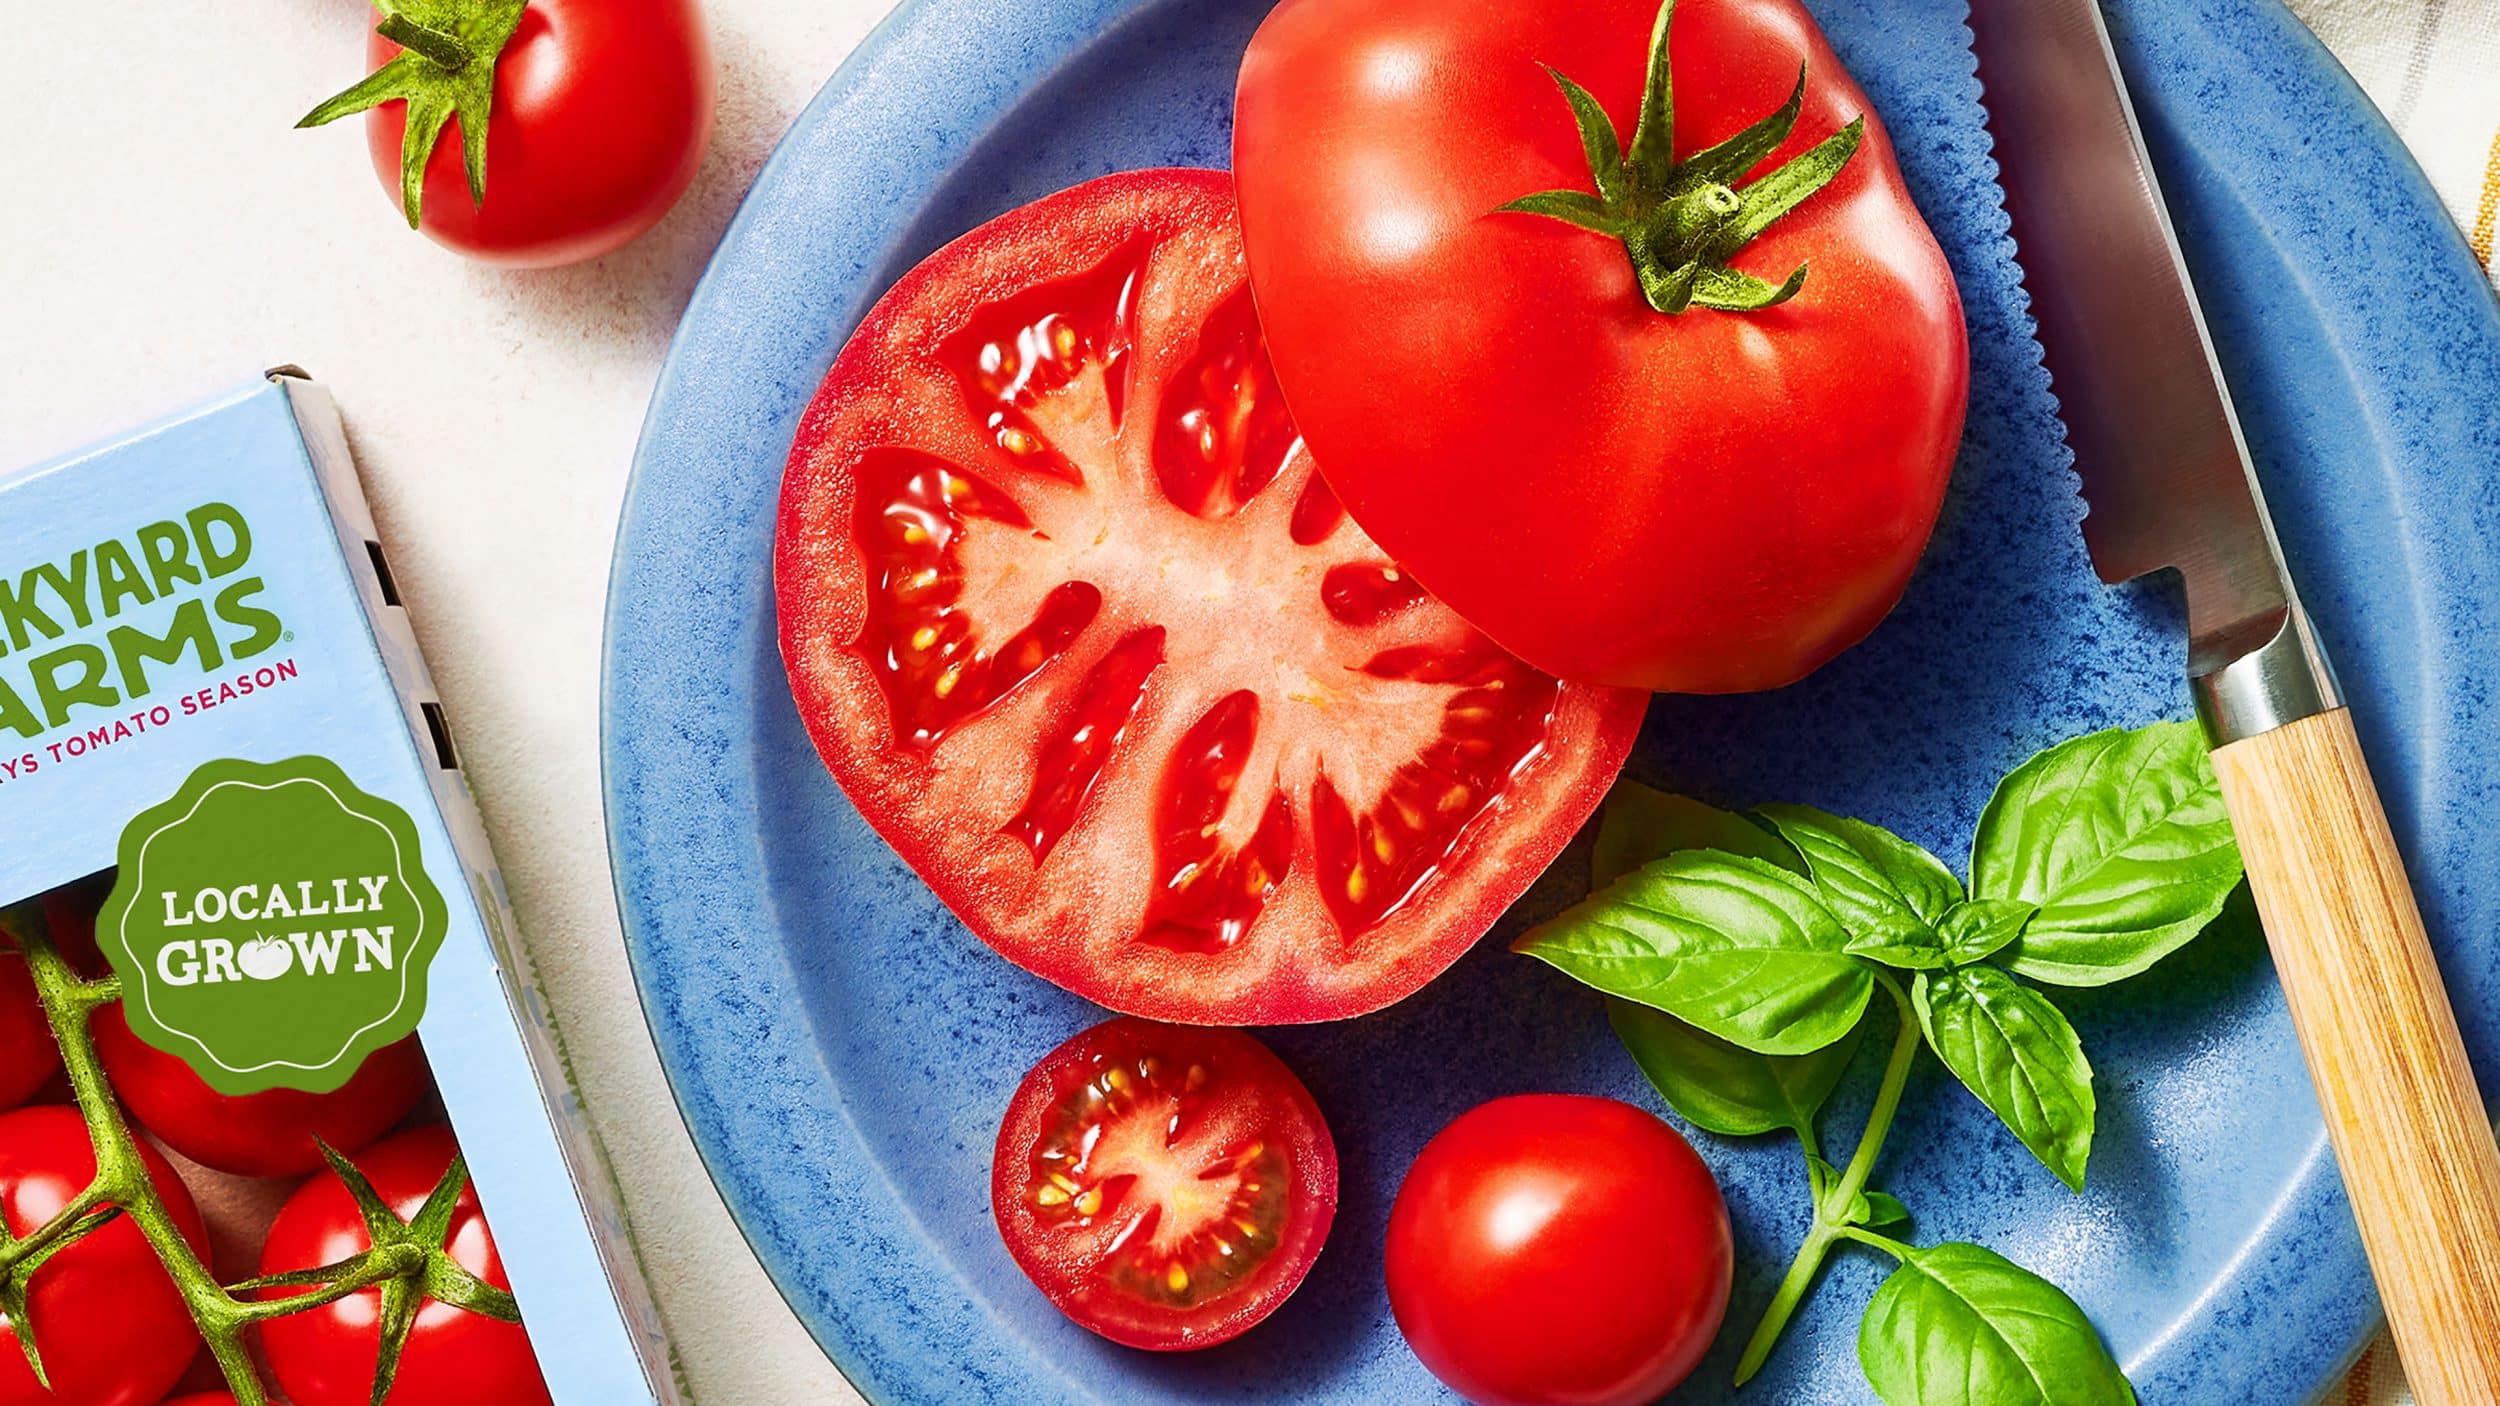 Image of sliced tomato